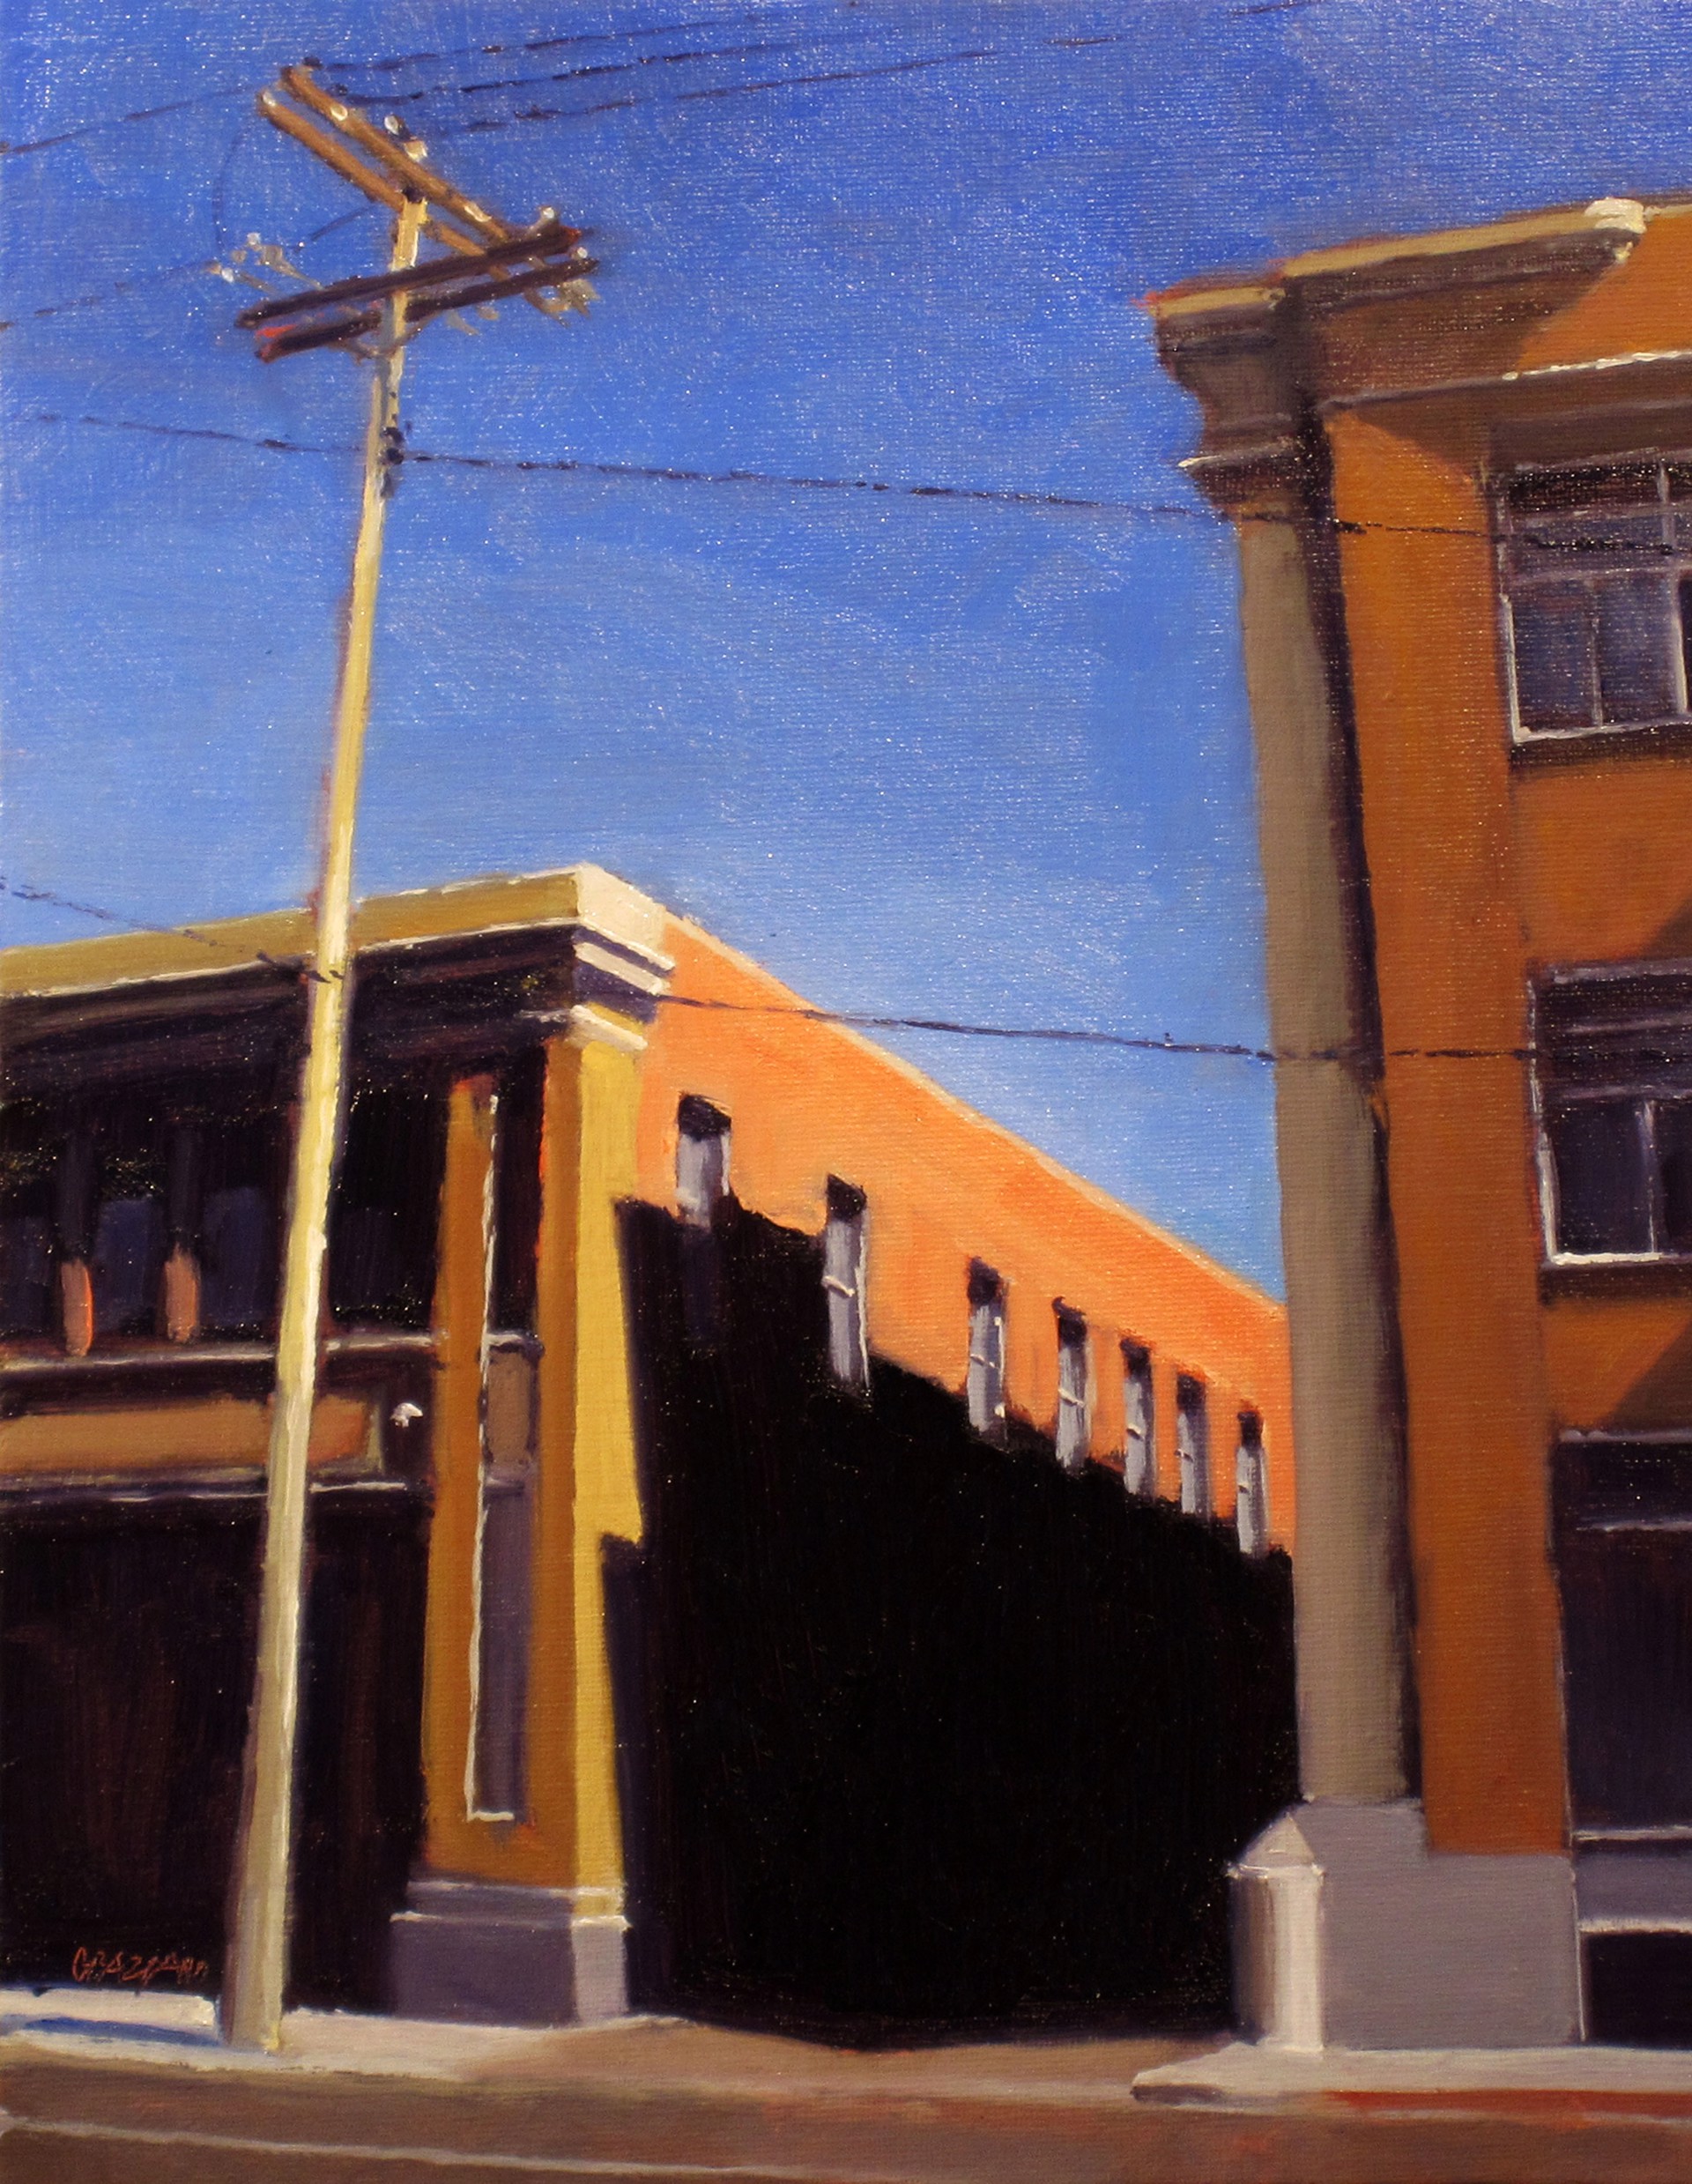 Alley Shadow by Dan Graziano